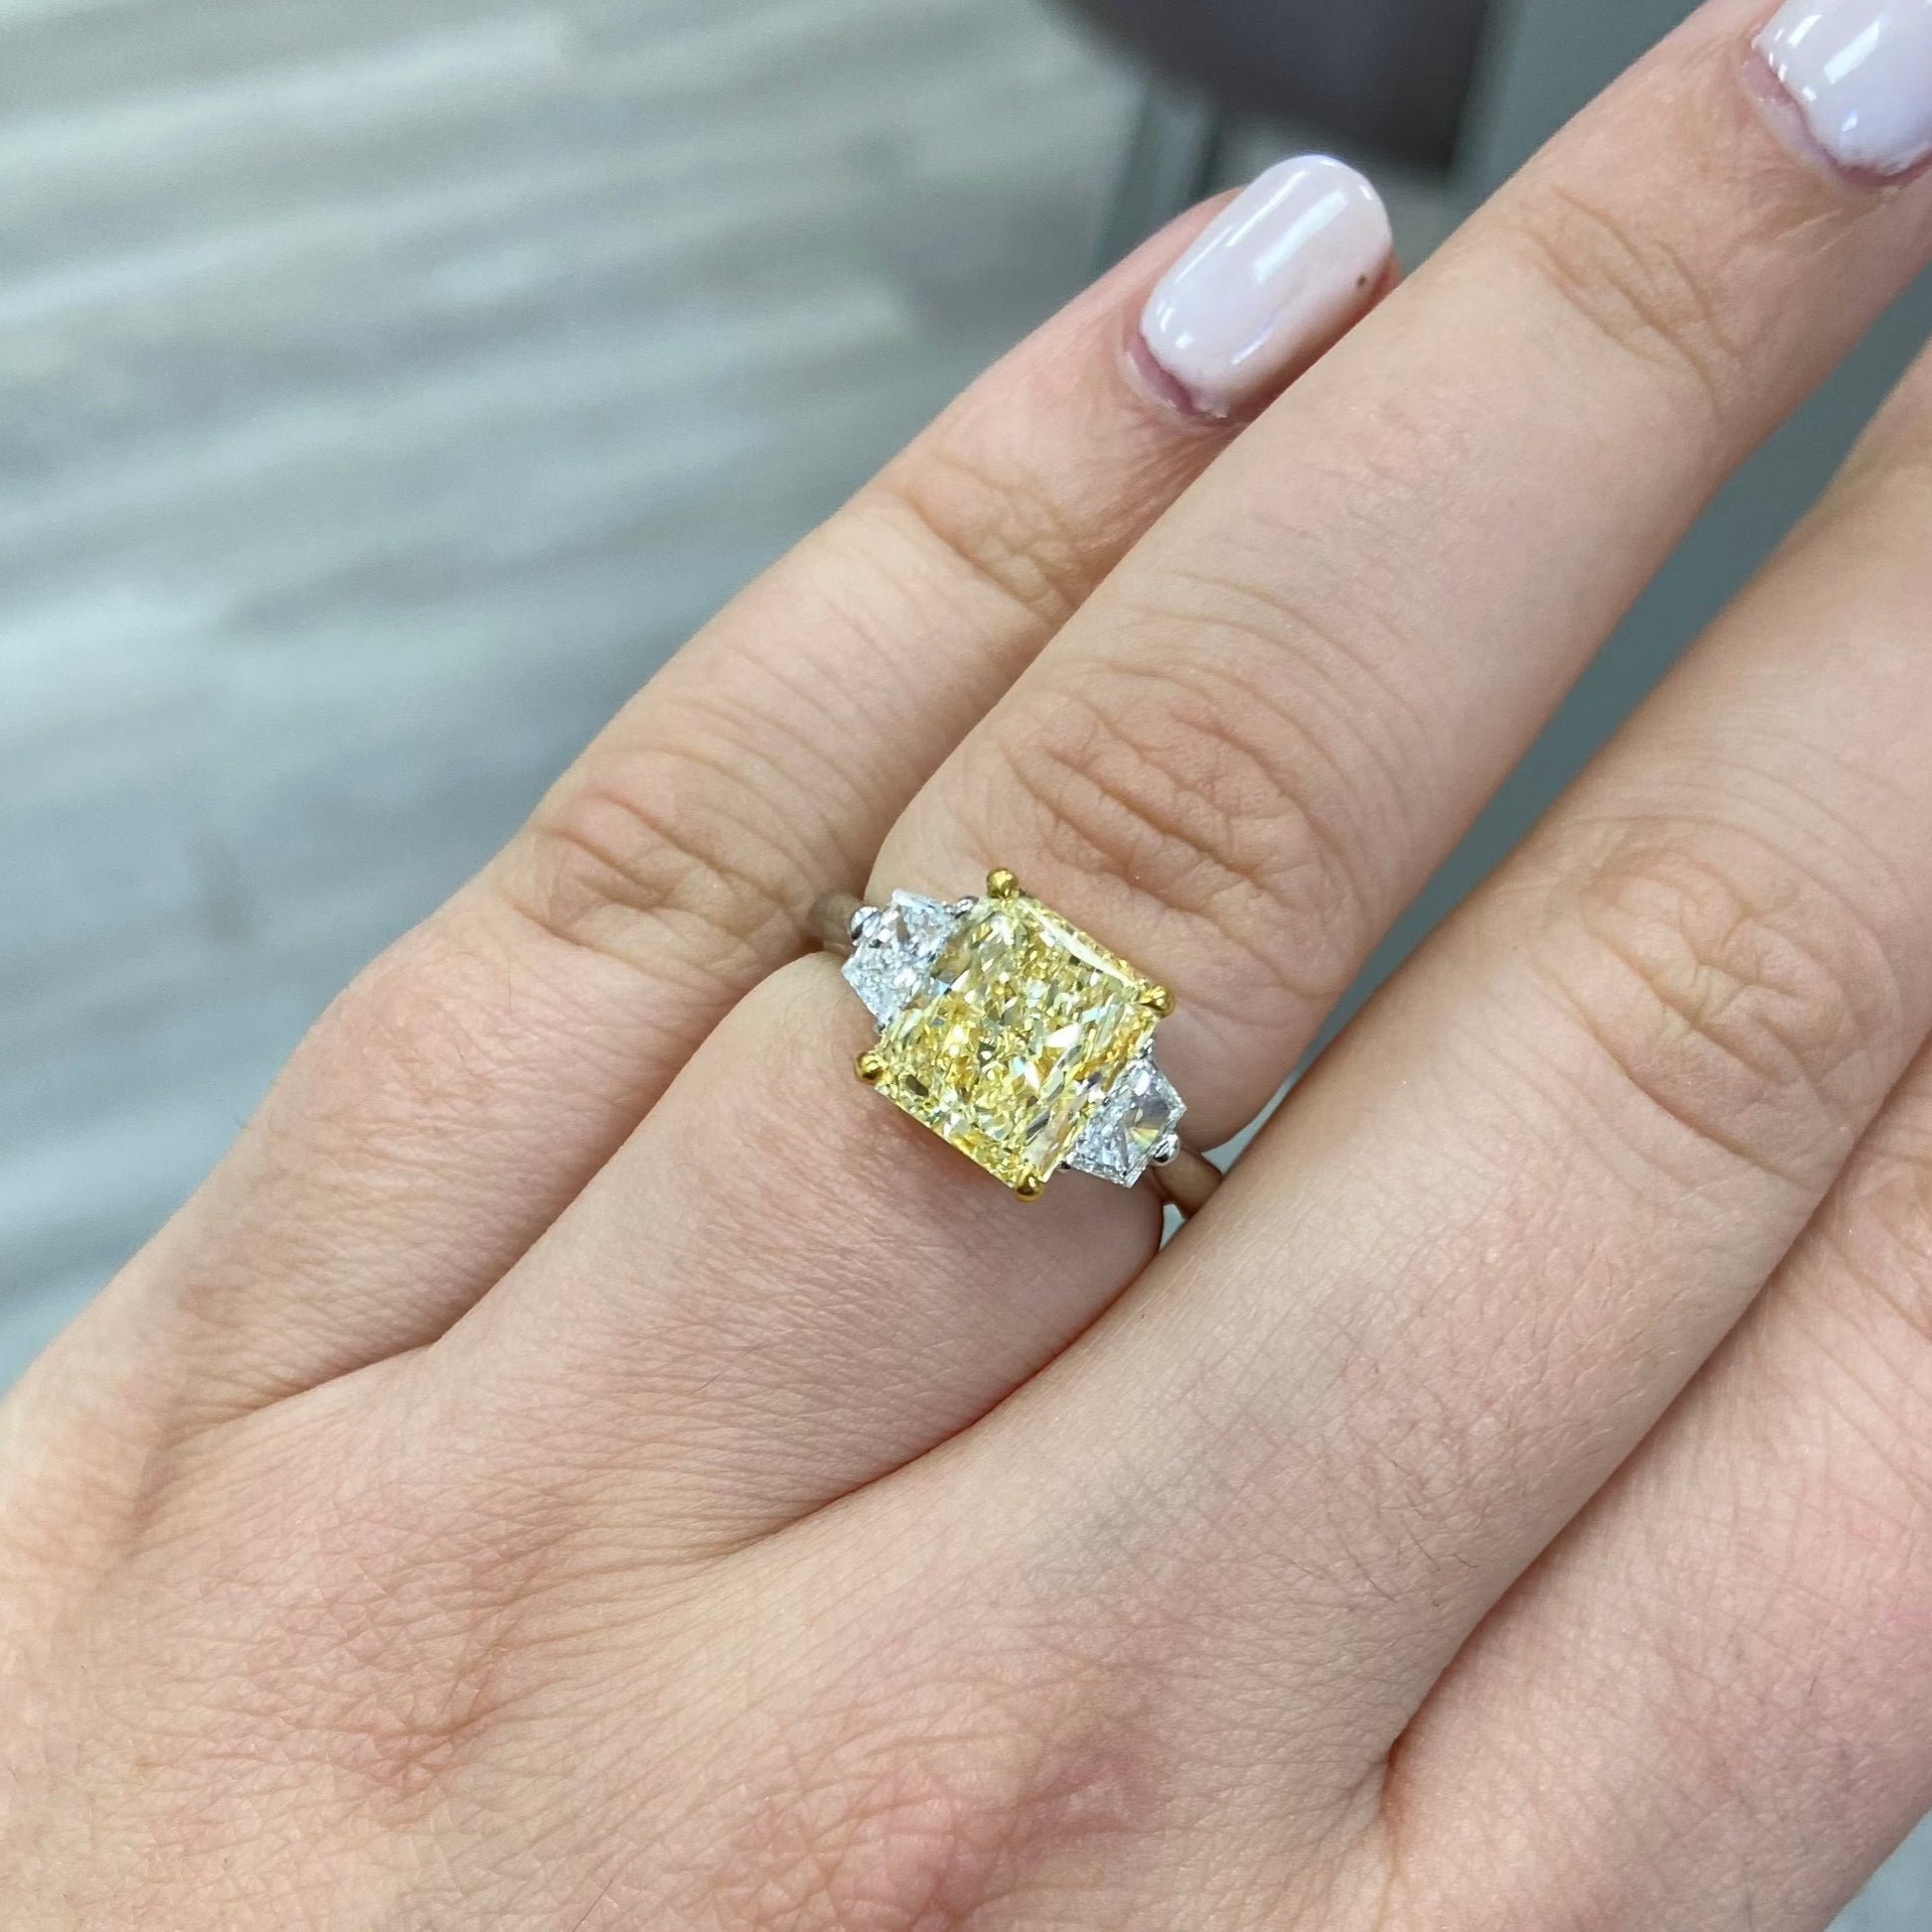 3 carat yellow diamond. yellow diamond ring. yellow diamond 3 stone ring. yellow diamond radiant cut. fancy yellow diamond. Buy yellow diamonds.